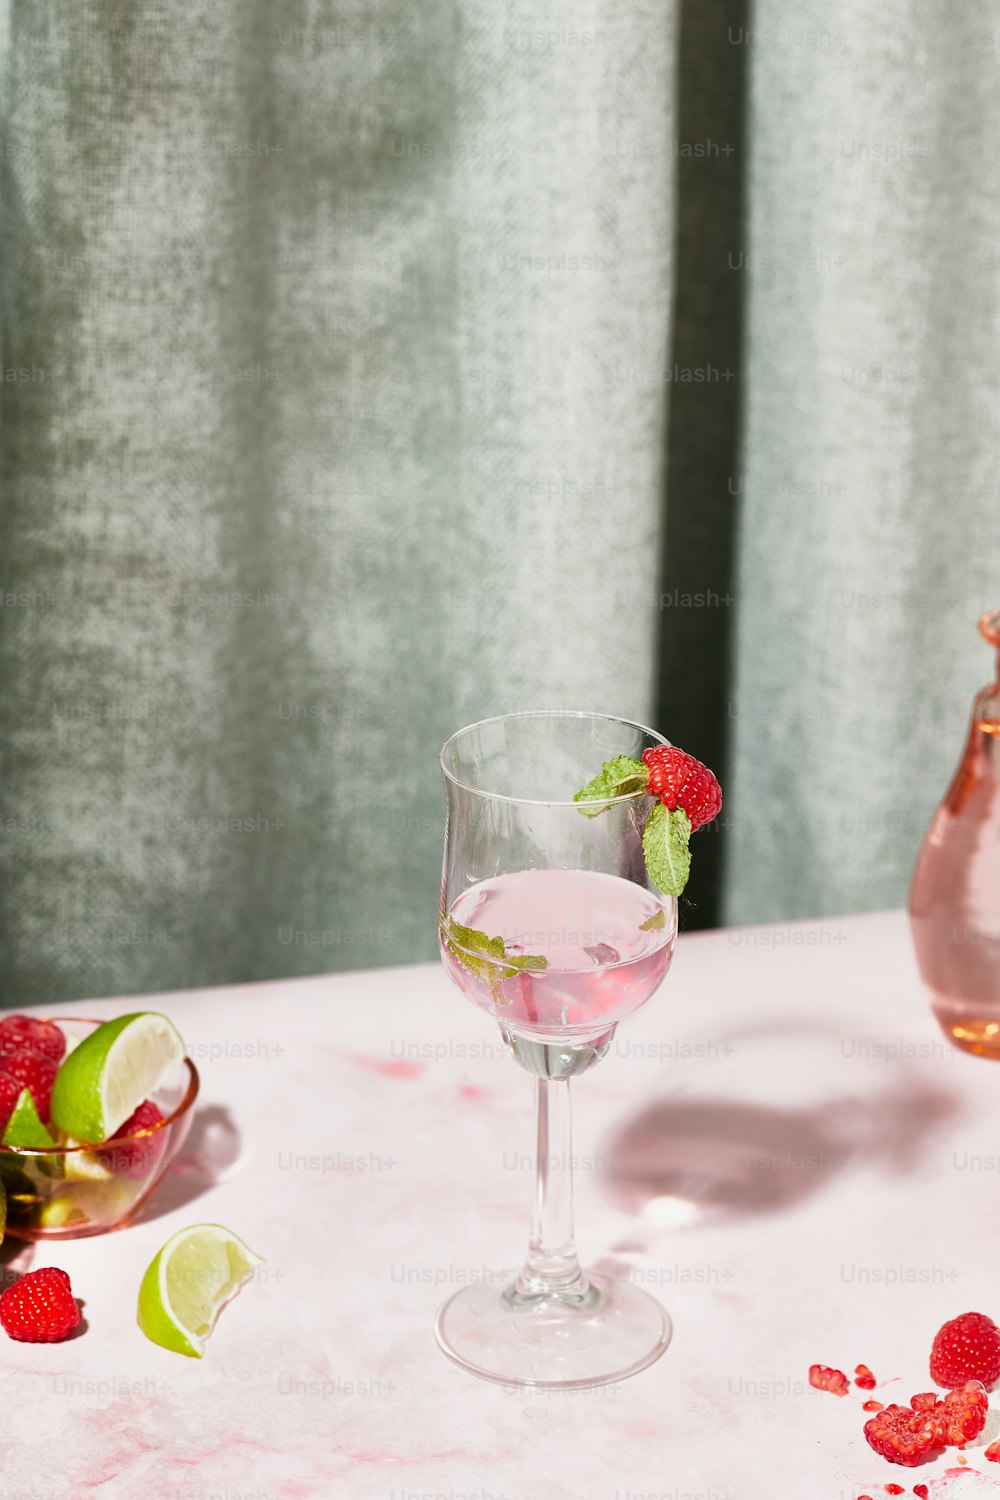 a glass of raspberry lemonade next to a pitcher of raspberry